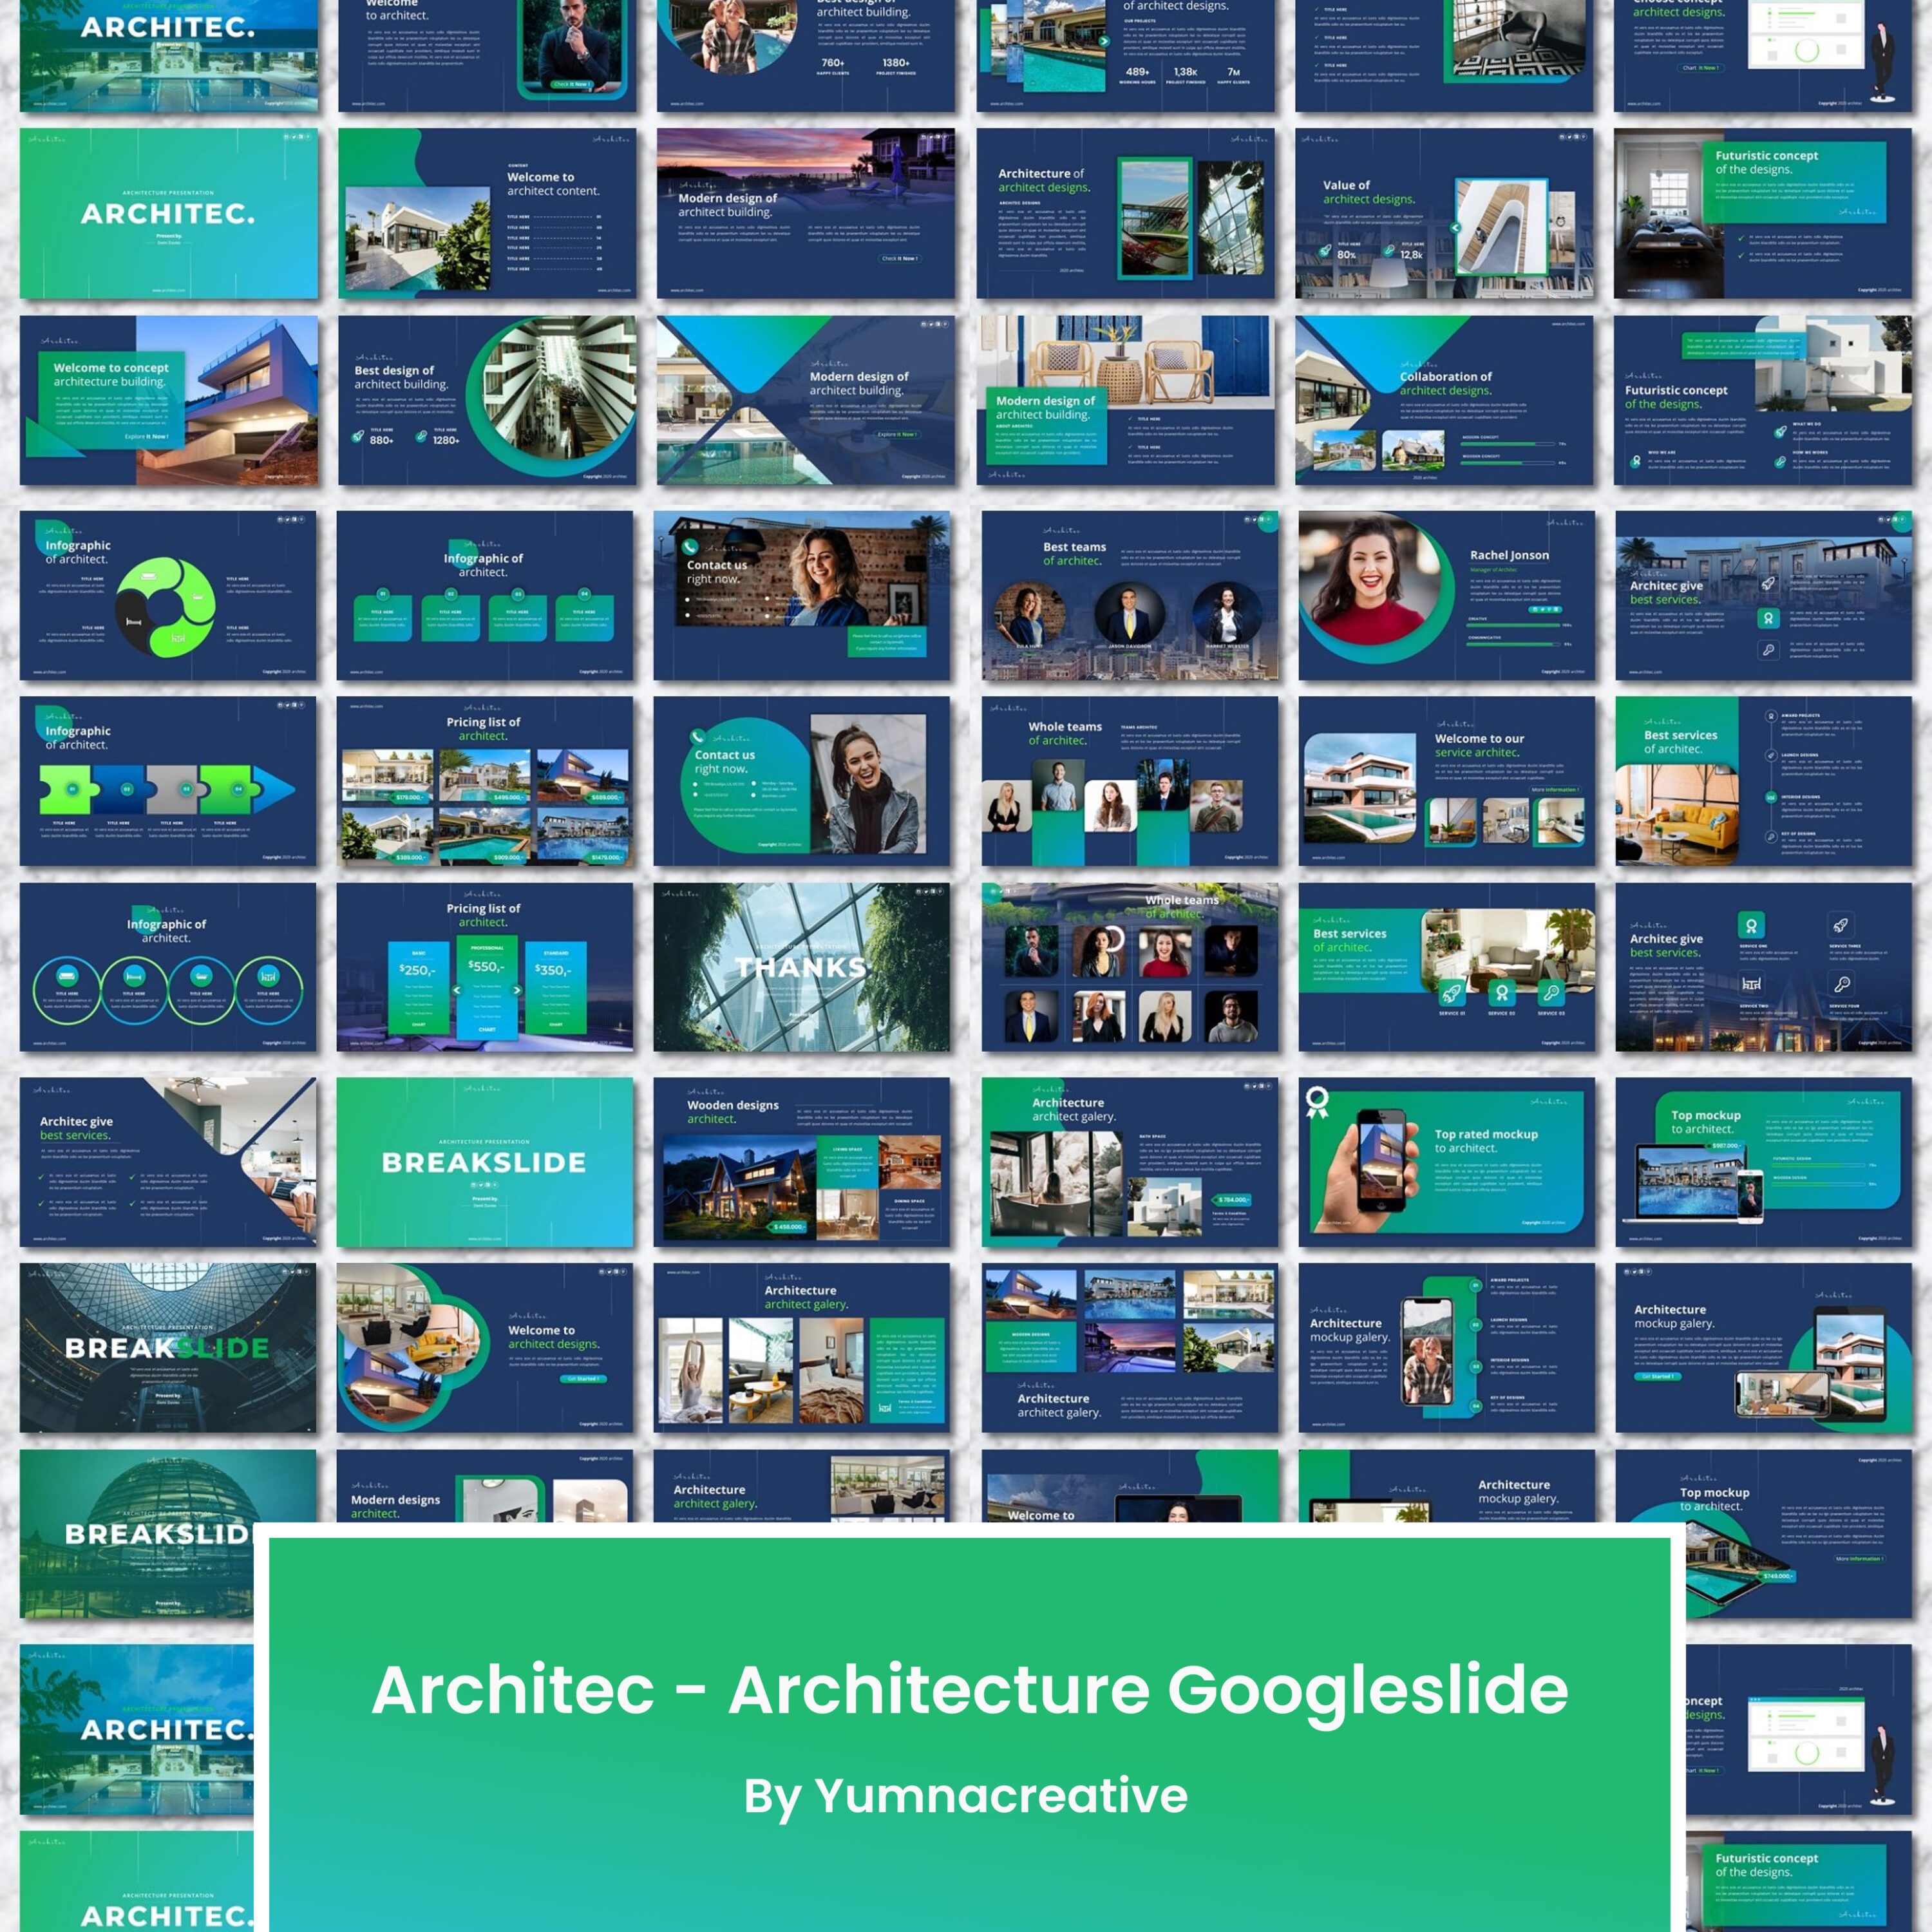 Architec Architecture Google Slide - main image preview.